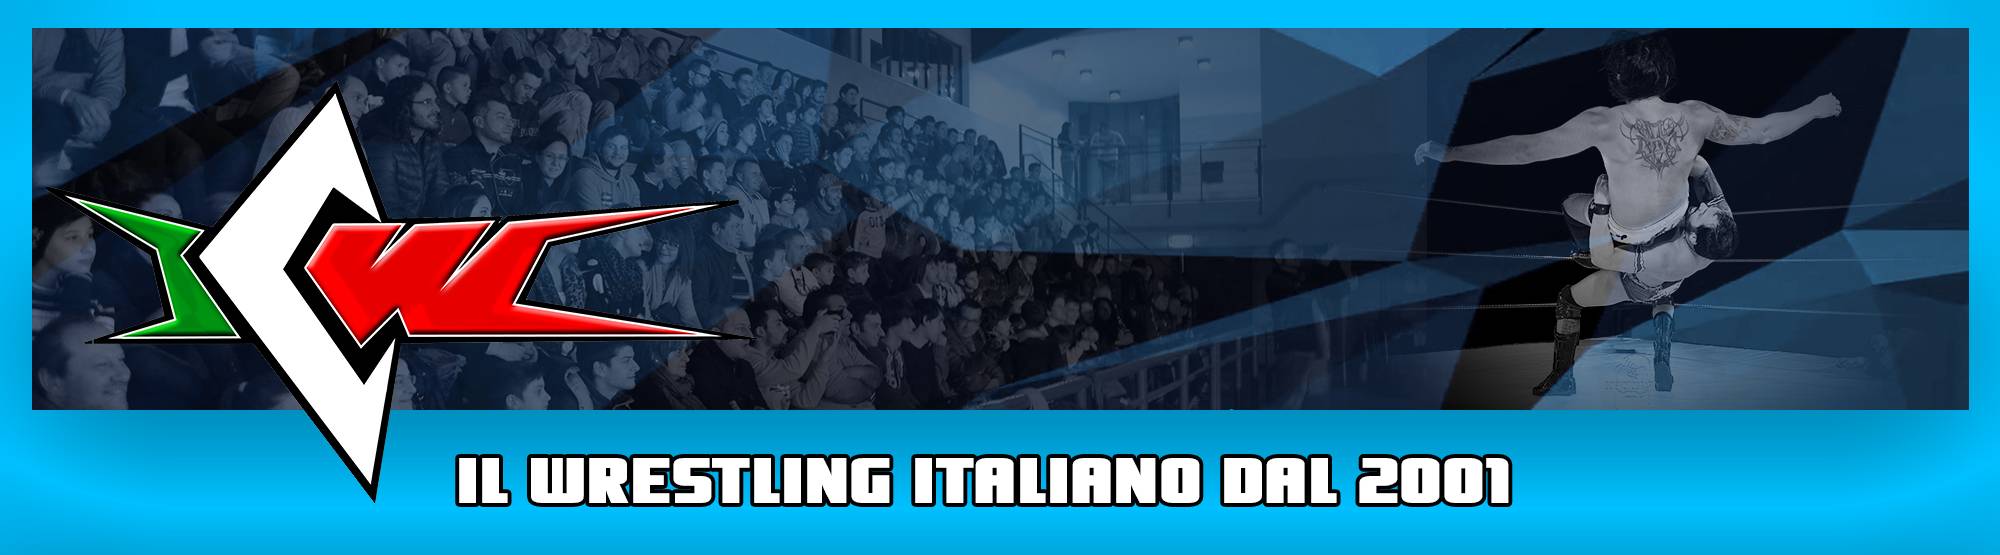 ICW – Italian Championship Wrestling a.s.d. – I Campioni del Wrestling!